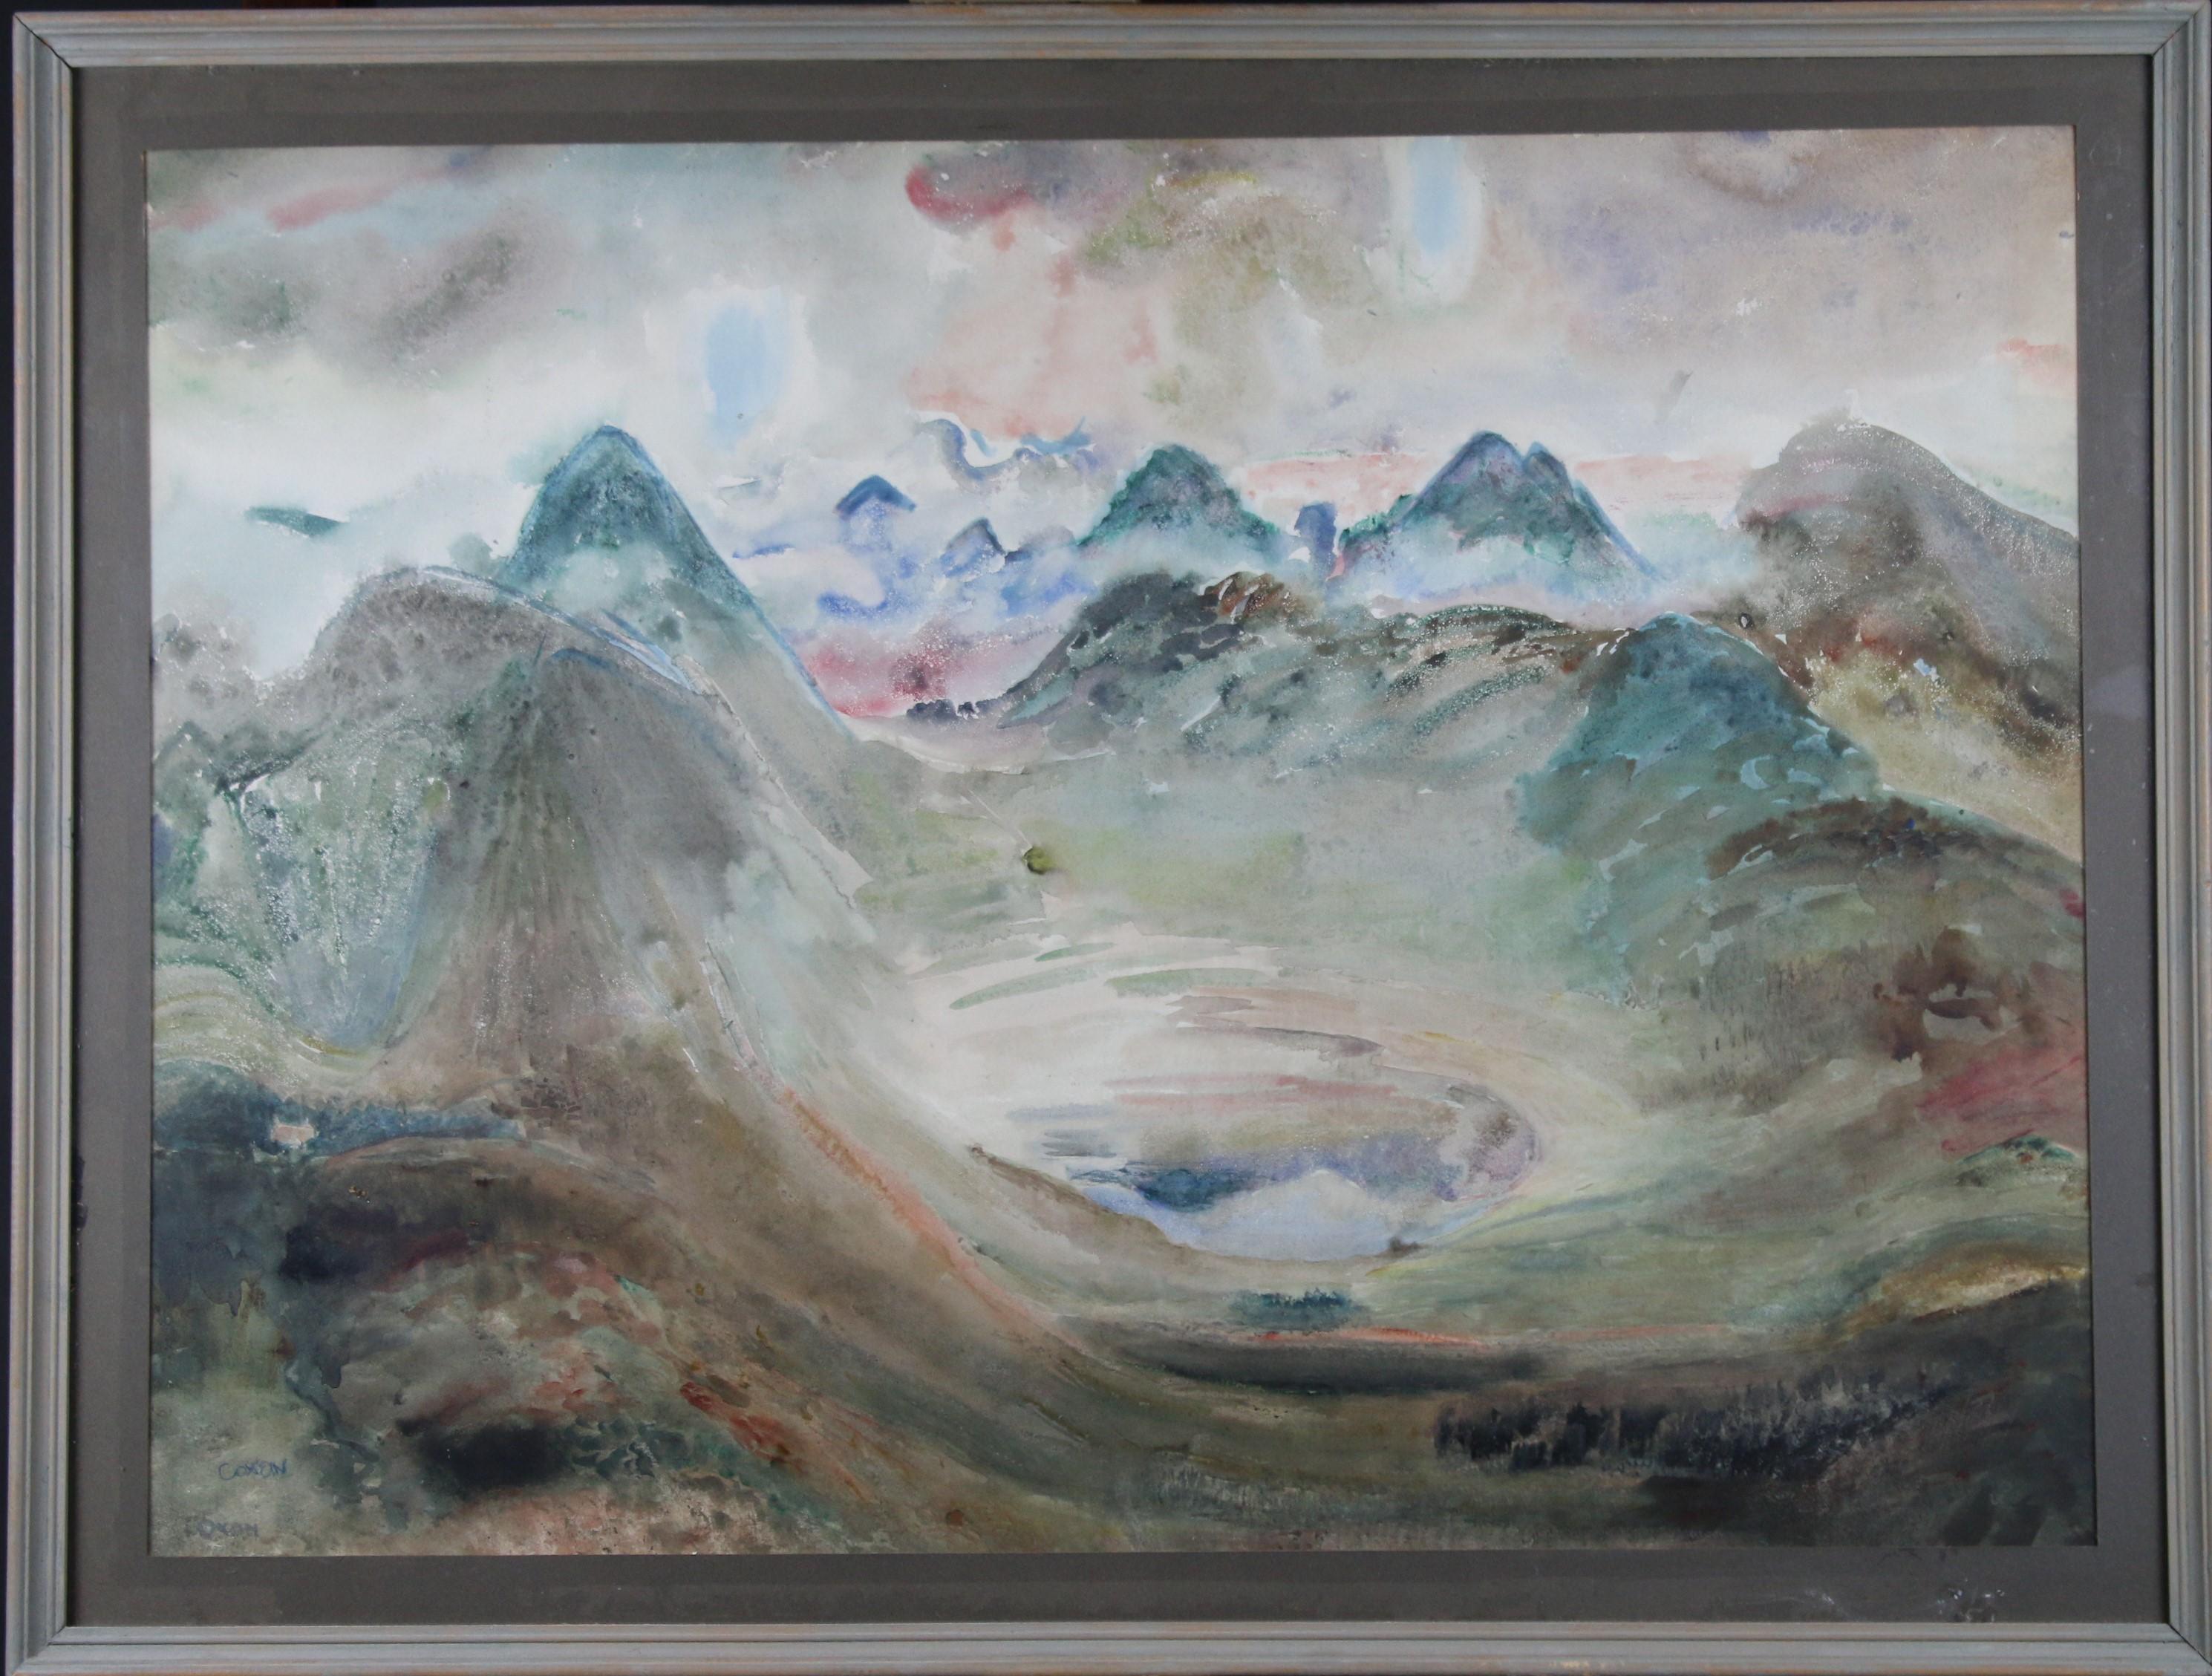 Raymond Coxon Landscape Painting - Surreal Mountainous Landscape of the Pyrenees